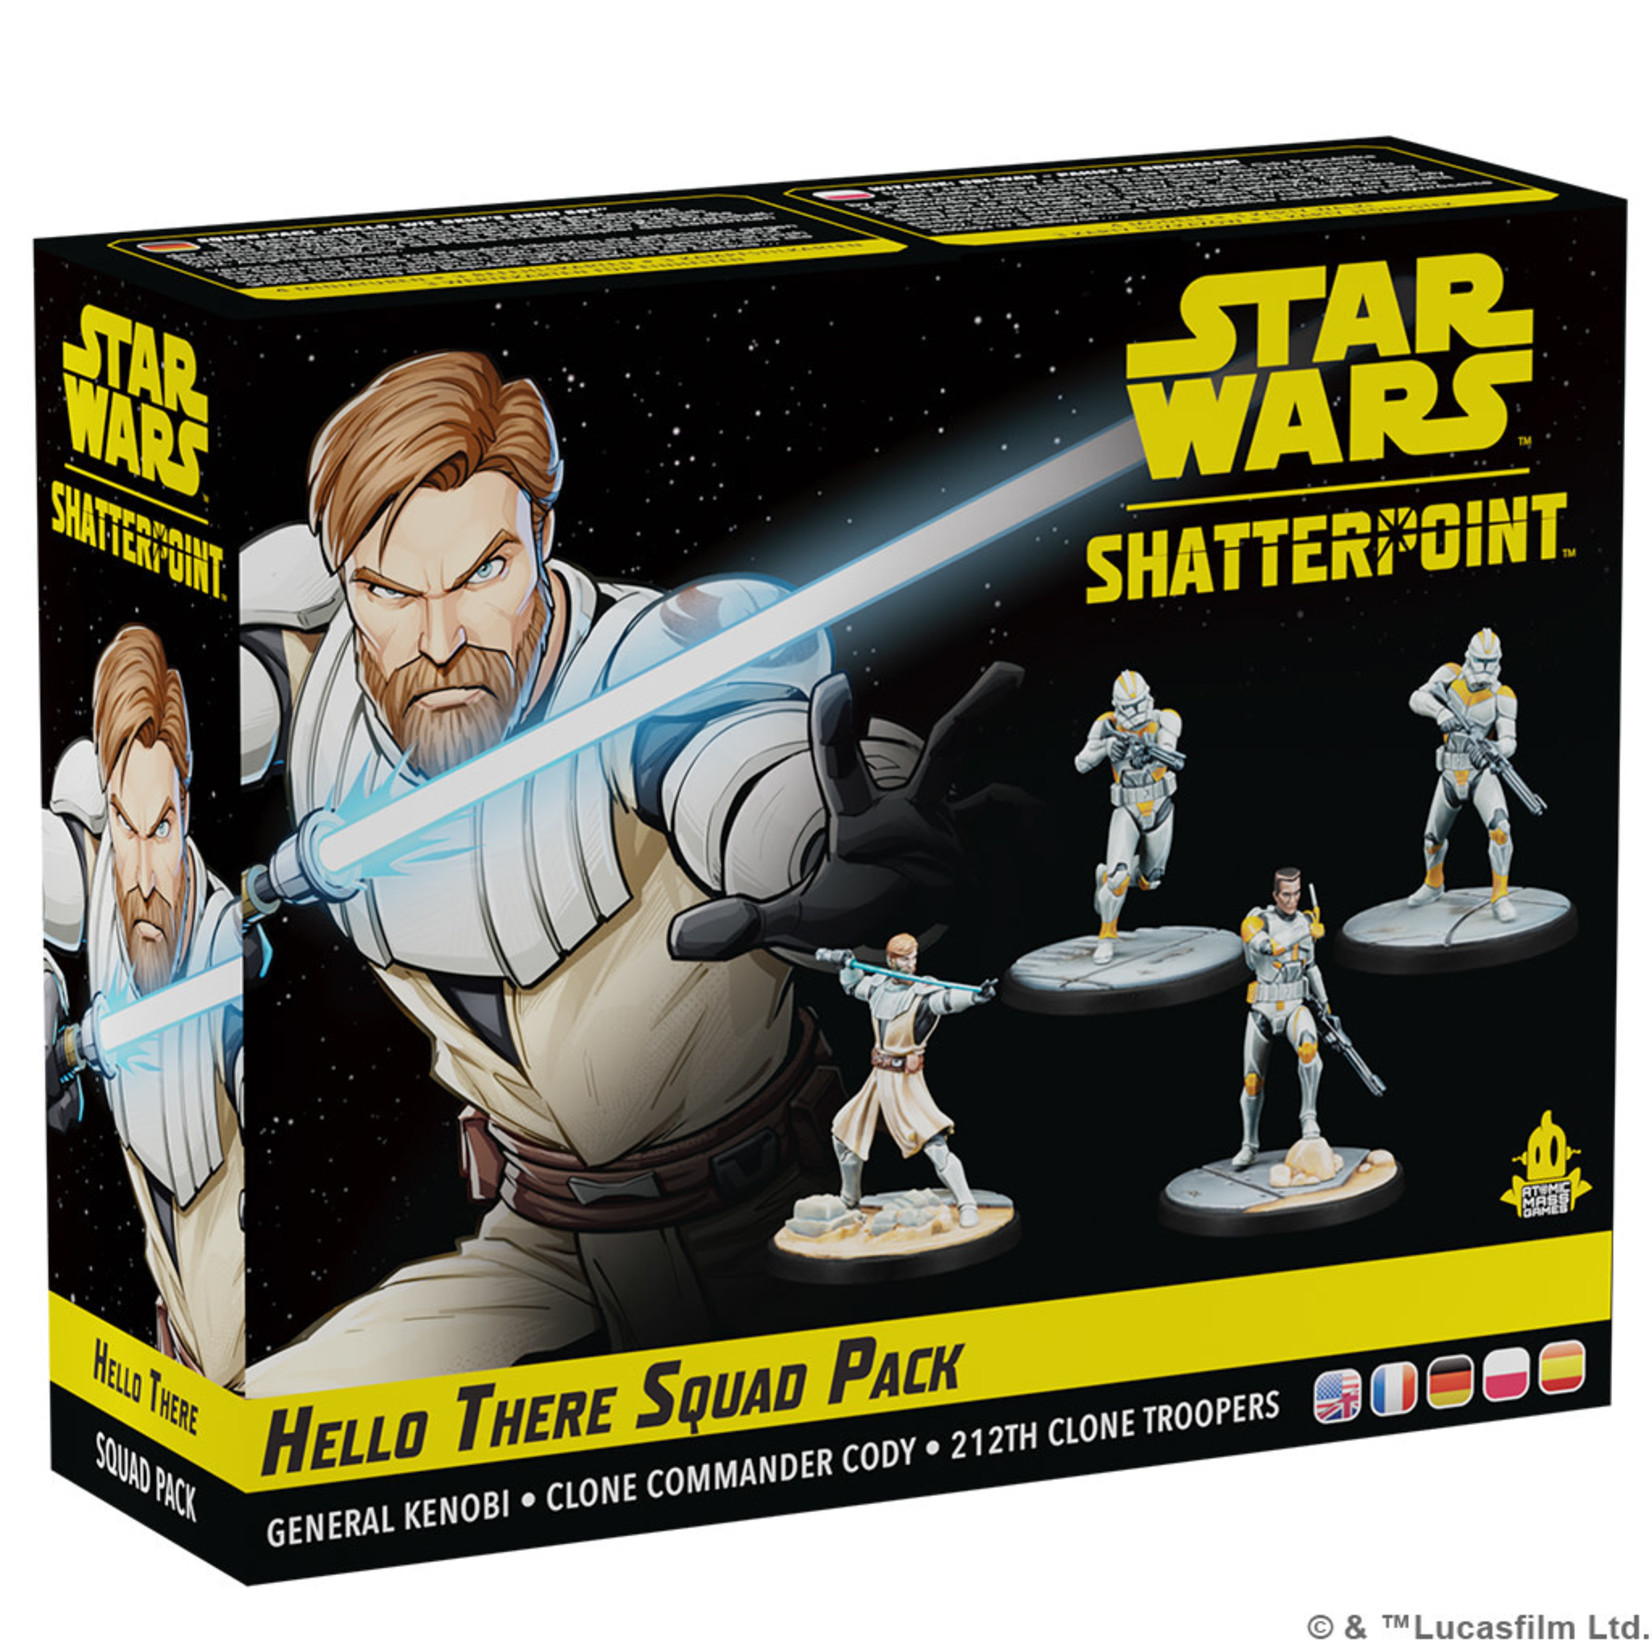 Fantasy Flight Games Star Wars Shatterpoint: Hello There: General Obi-Wan Kenobi Squad Pack